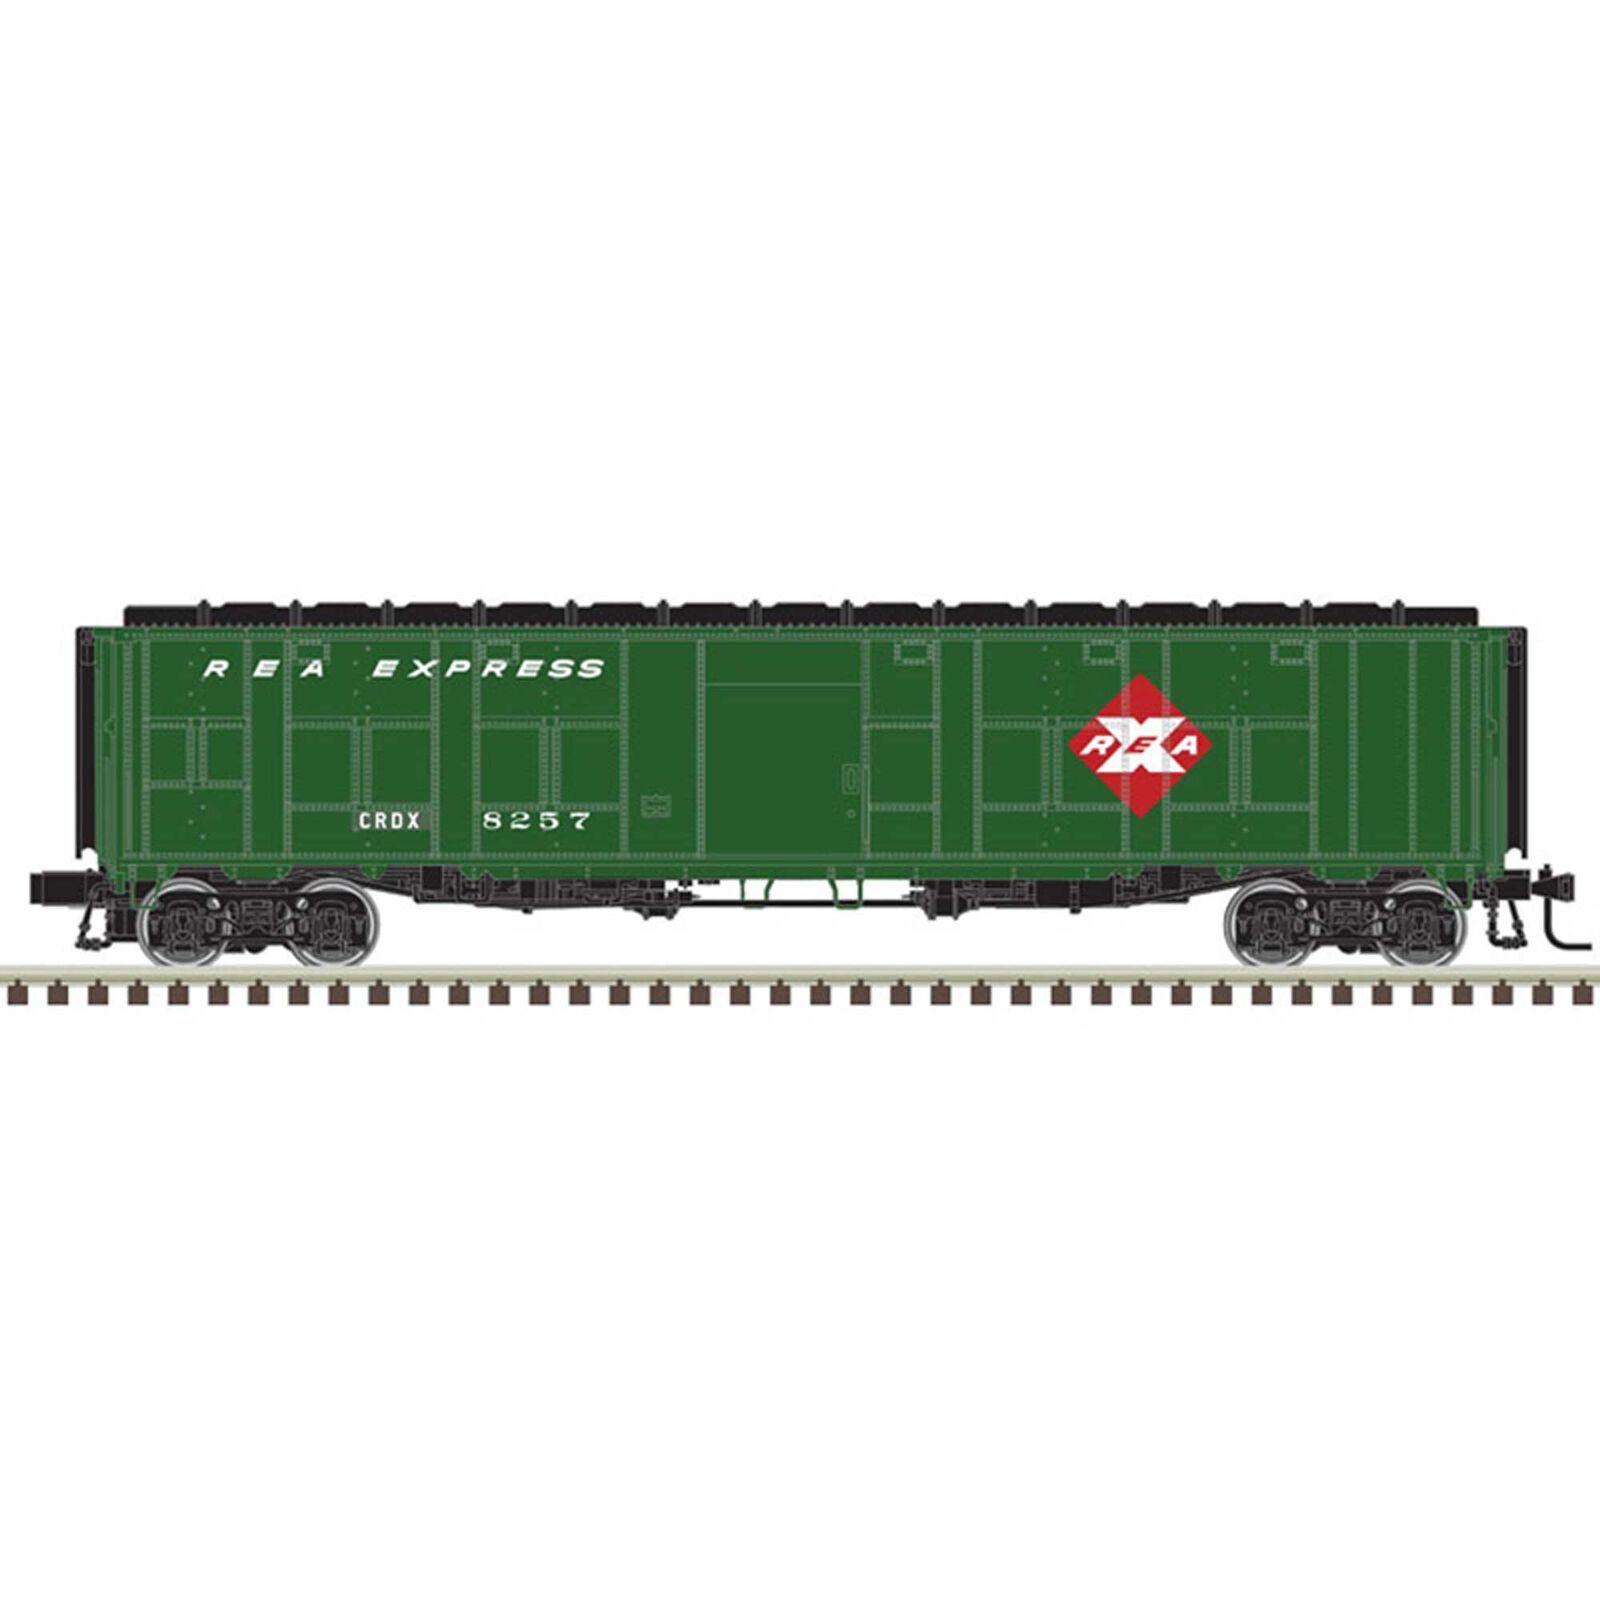 OScale Troop Series Car 2-Rail Railway Exp (CRDX)